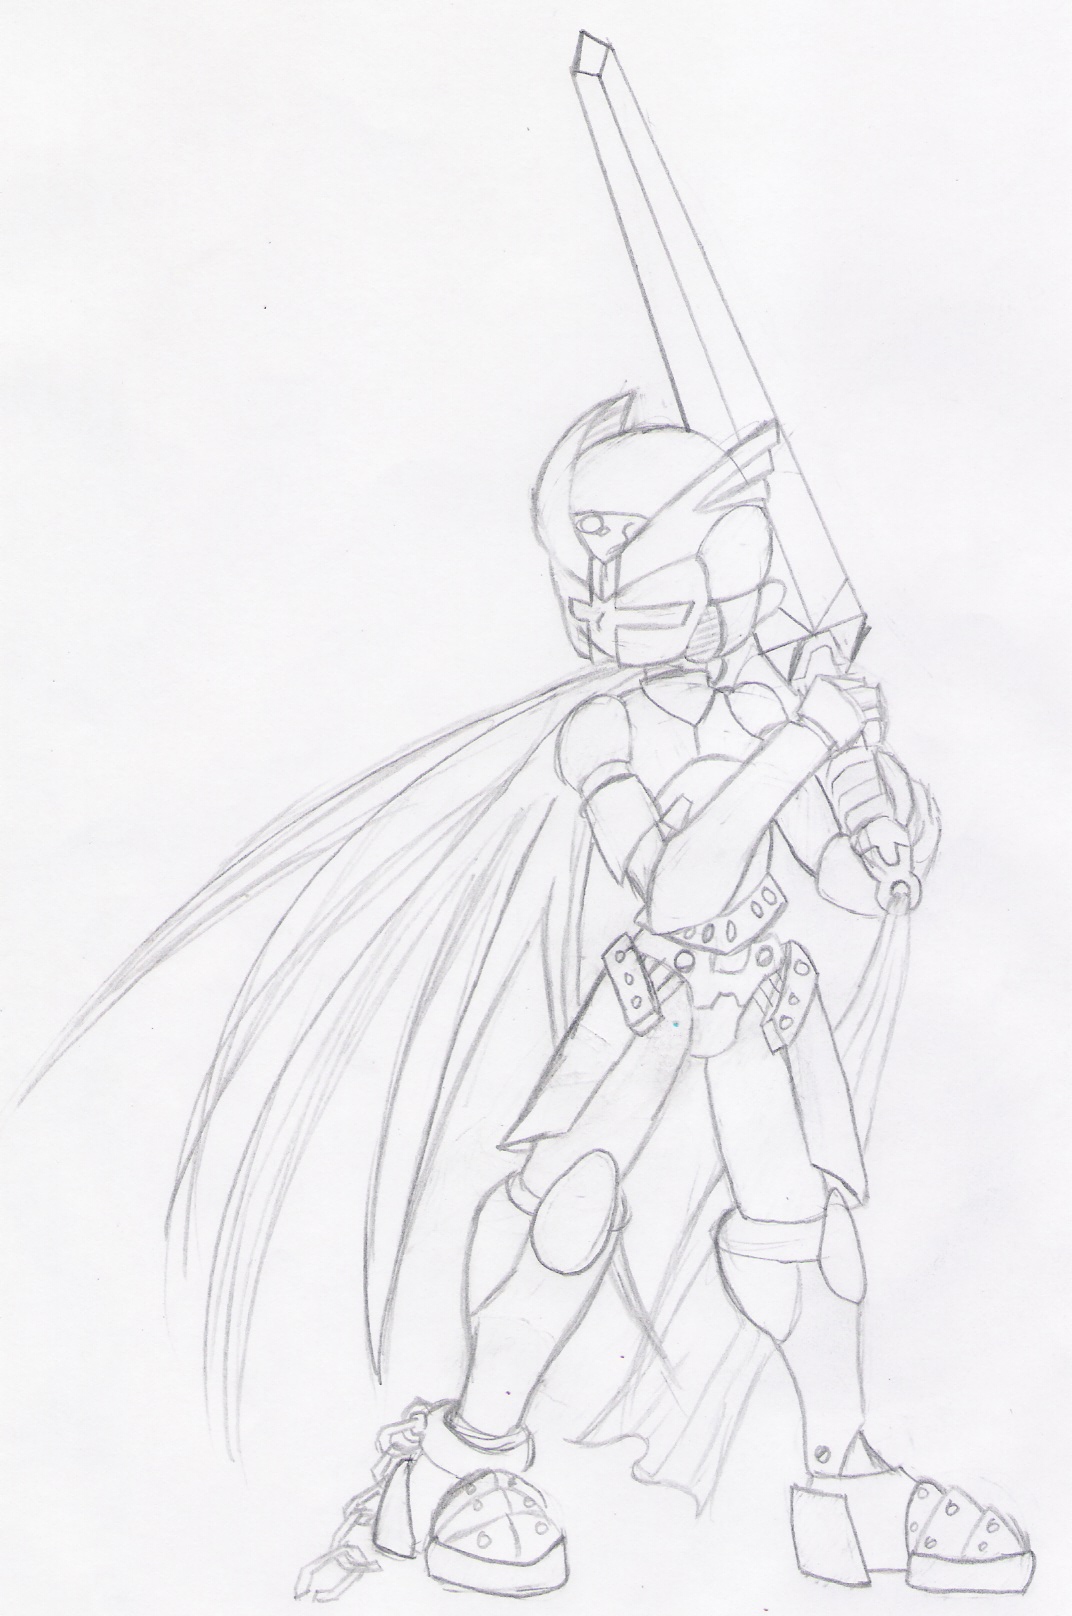 Zero(Knight Form) by UnderUnion